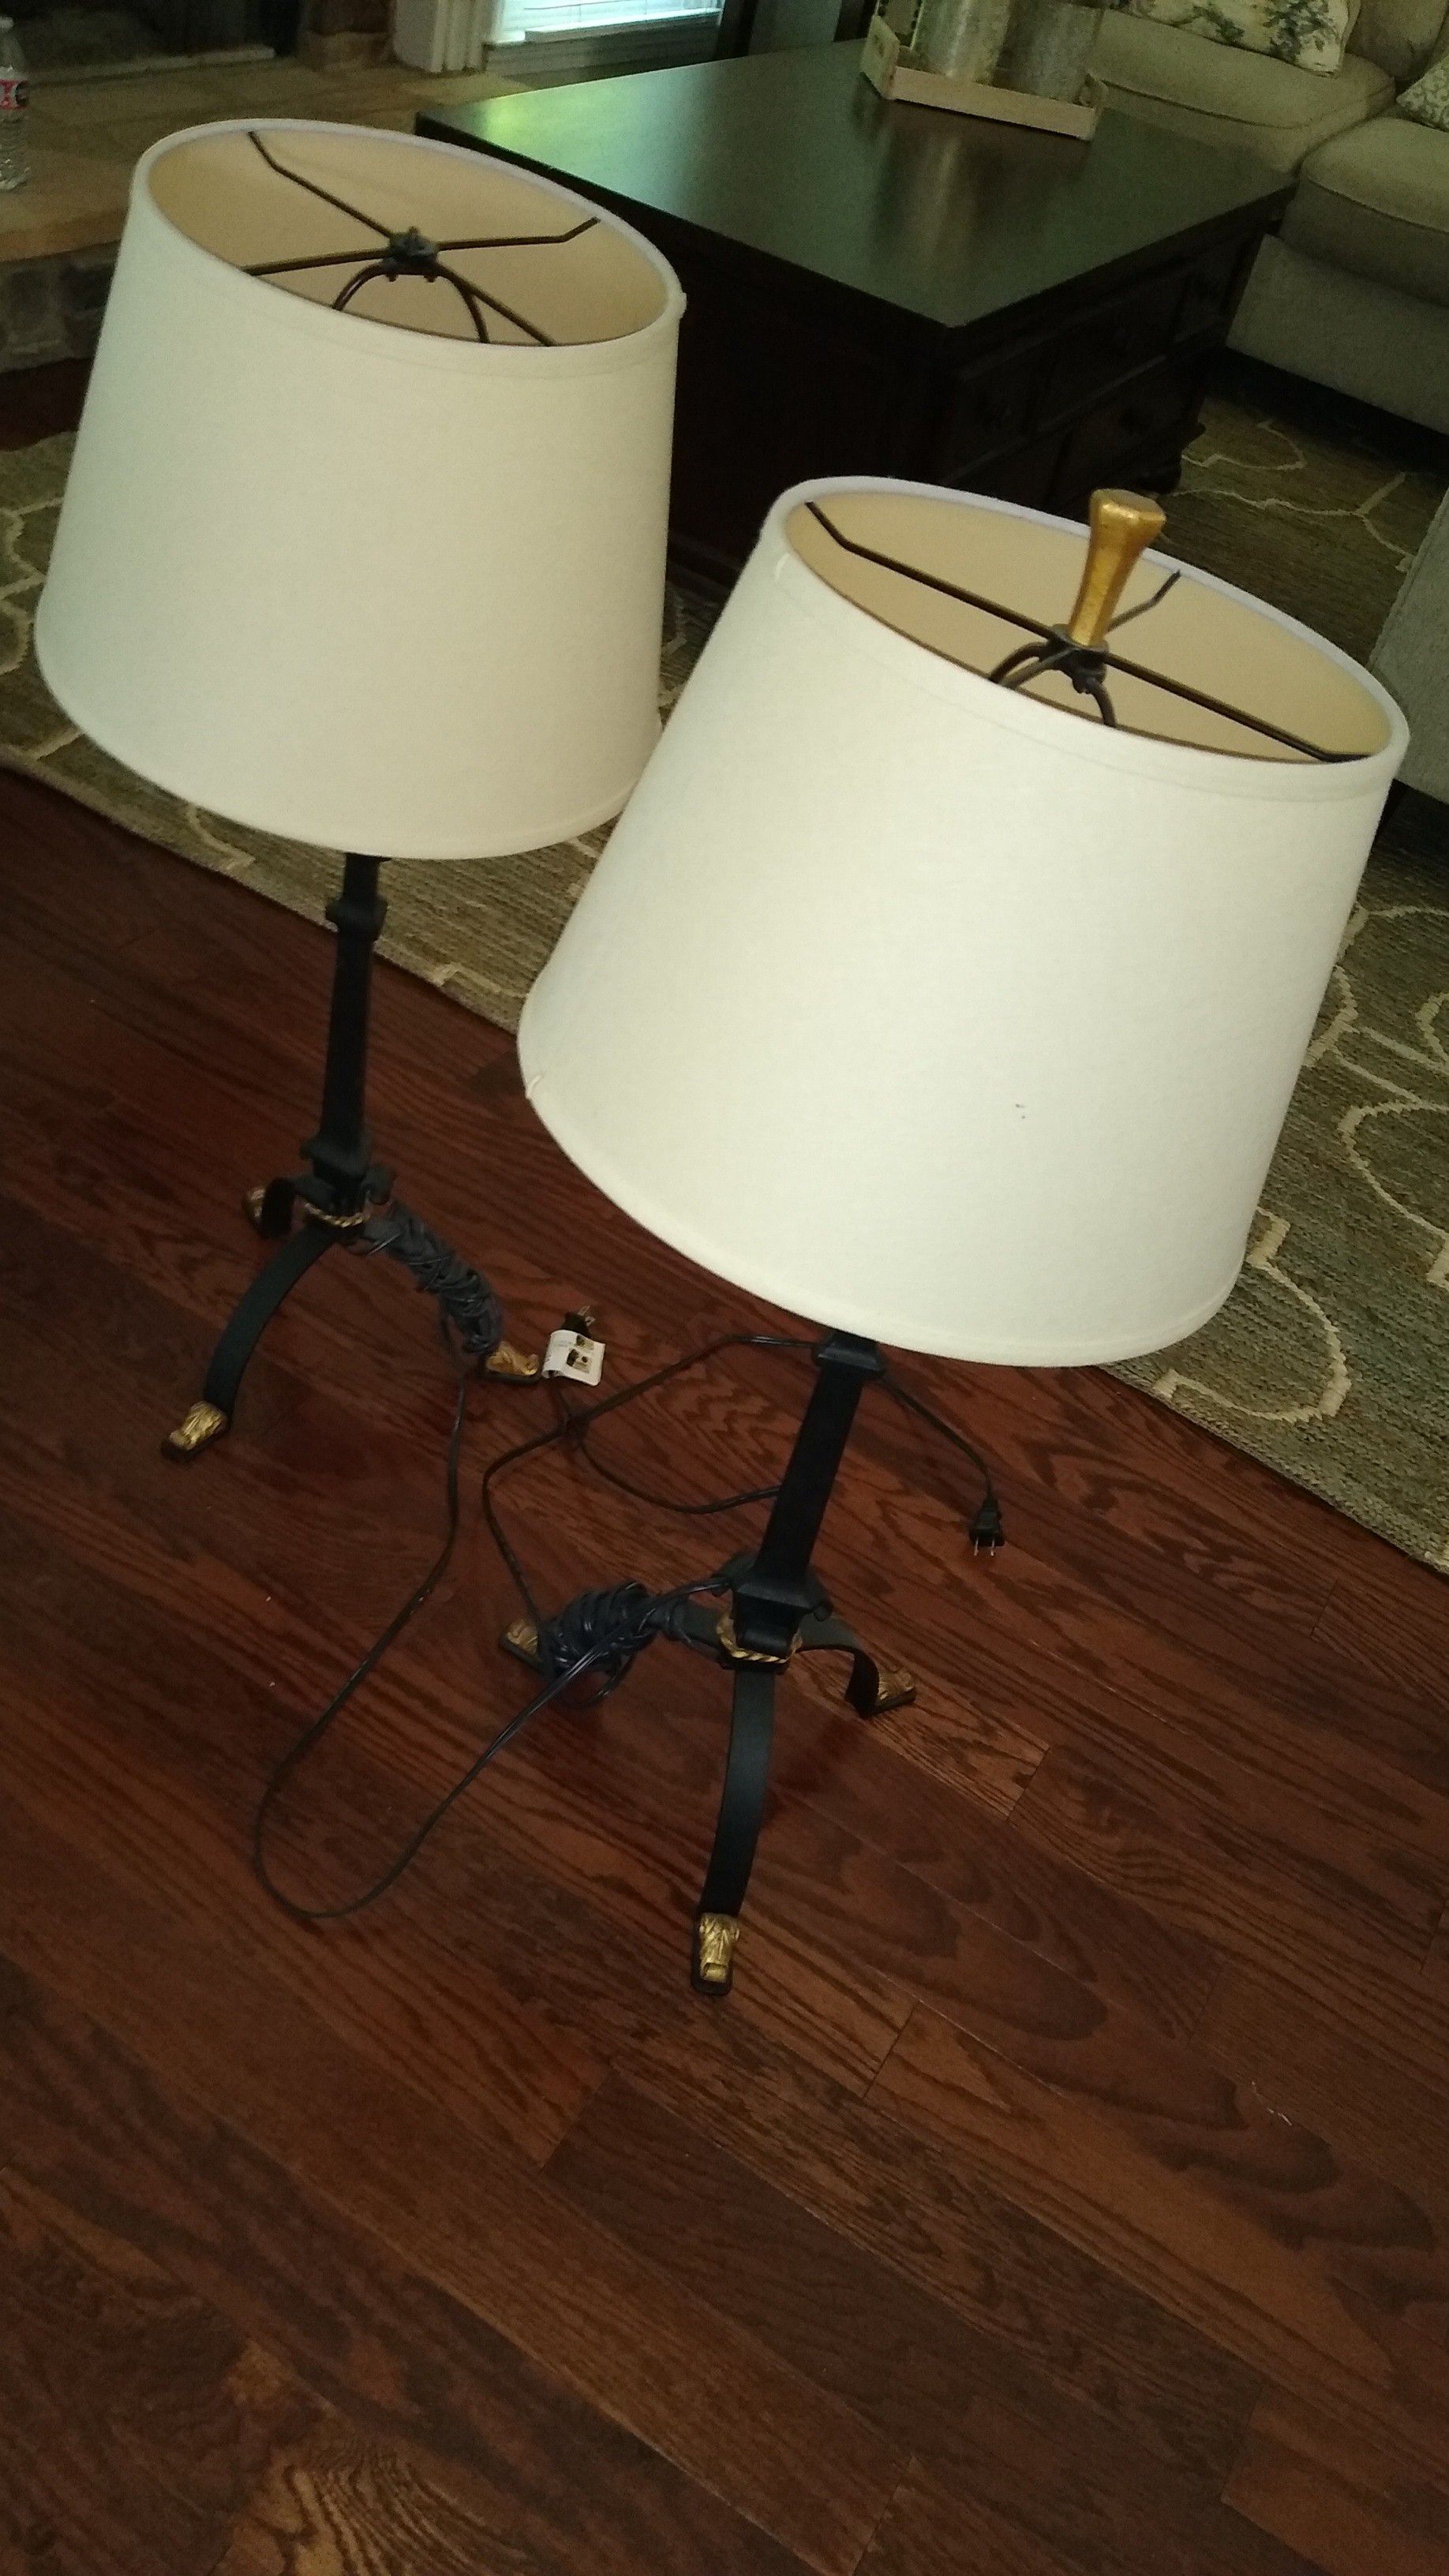 2 matching lamps